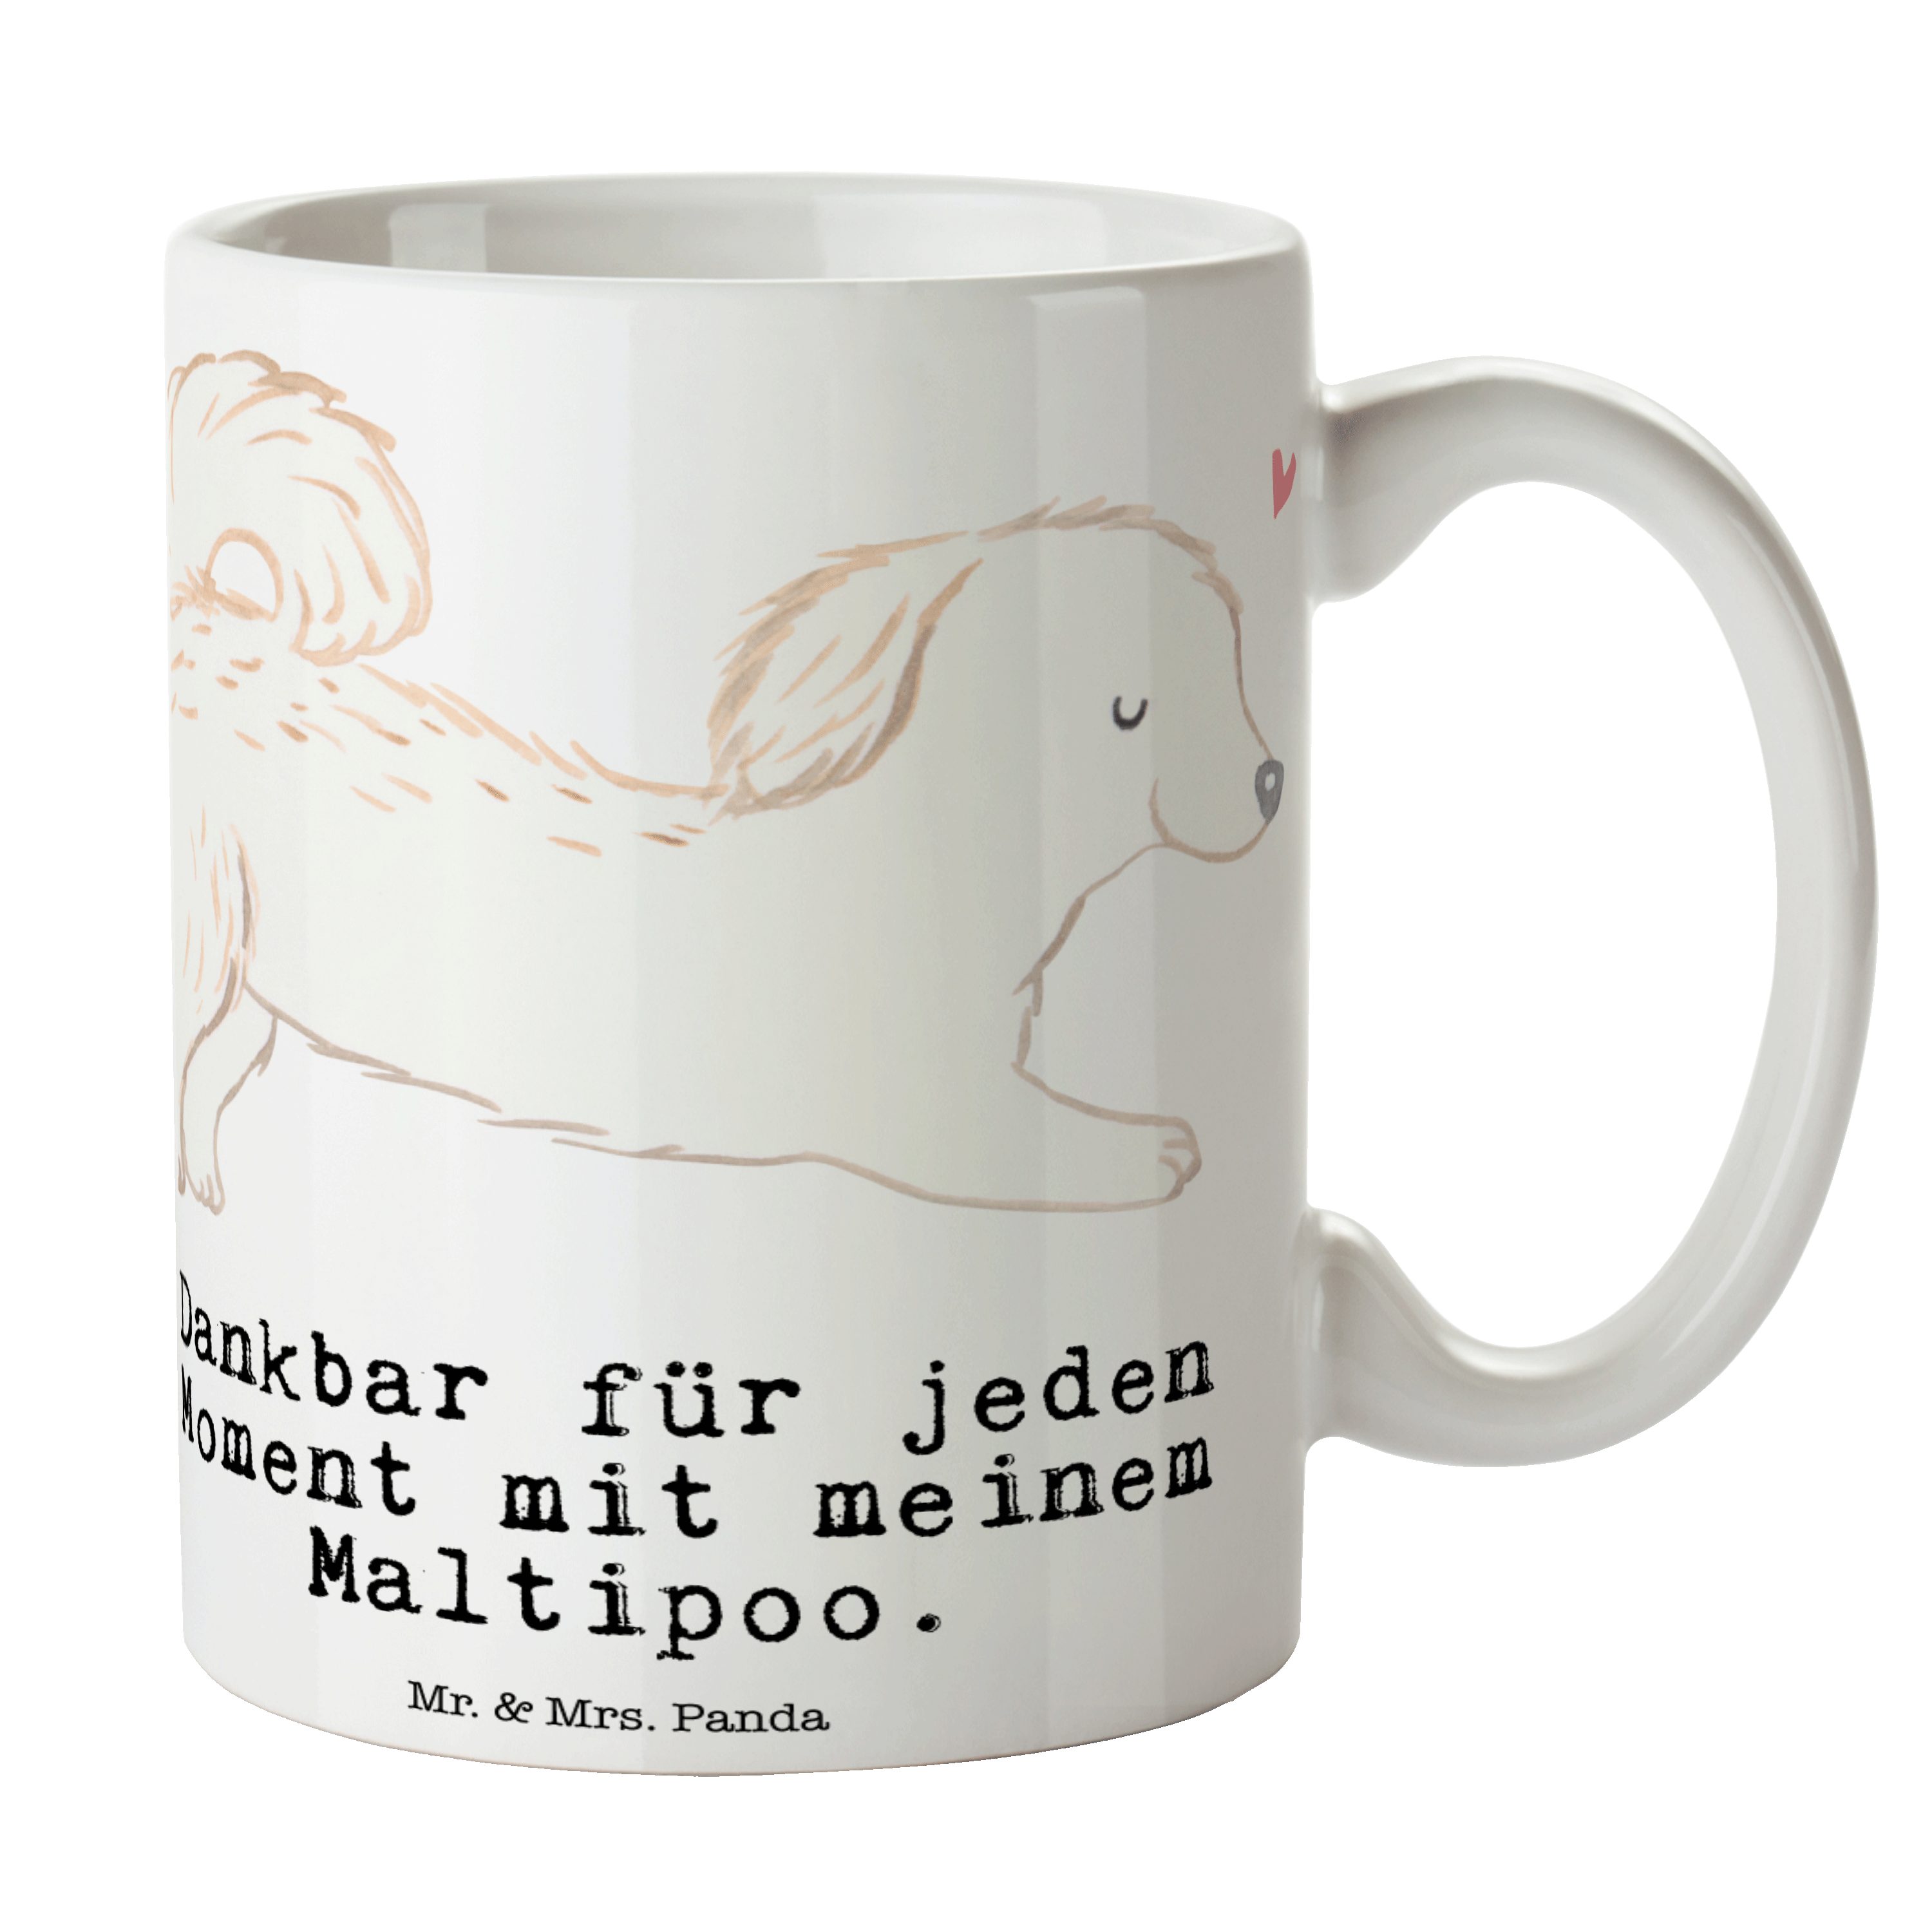 Mr. & Mrs. Panda Tasse Maltipoo Moment - Weiß - Geschenk, Kaffeebecher, Kreuzung, Schenken, Keramik | Tassen